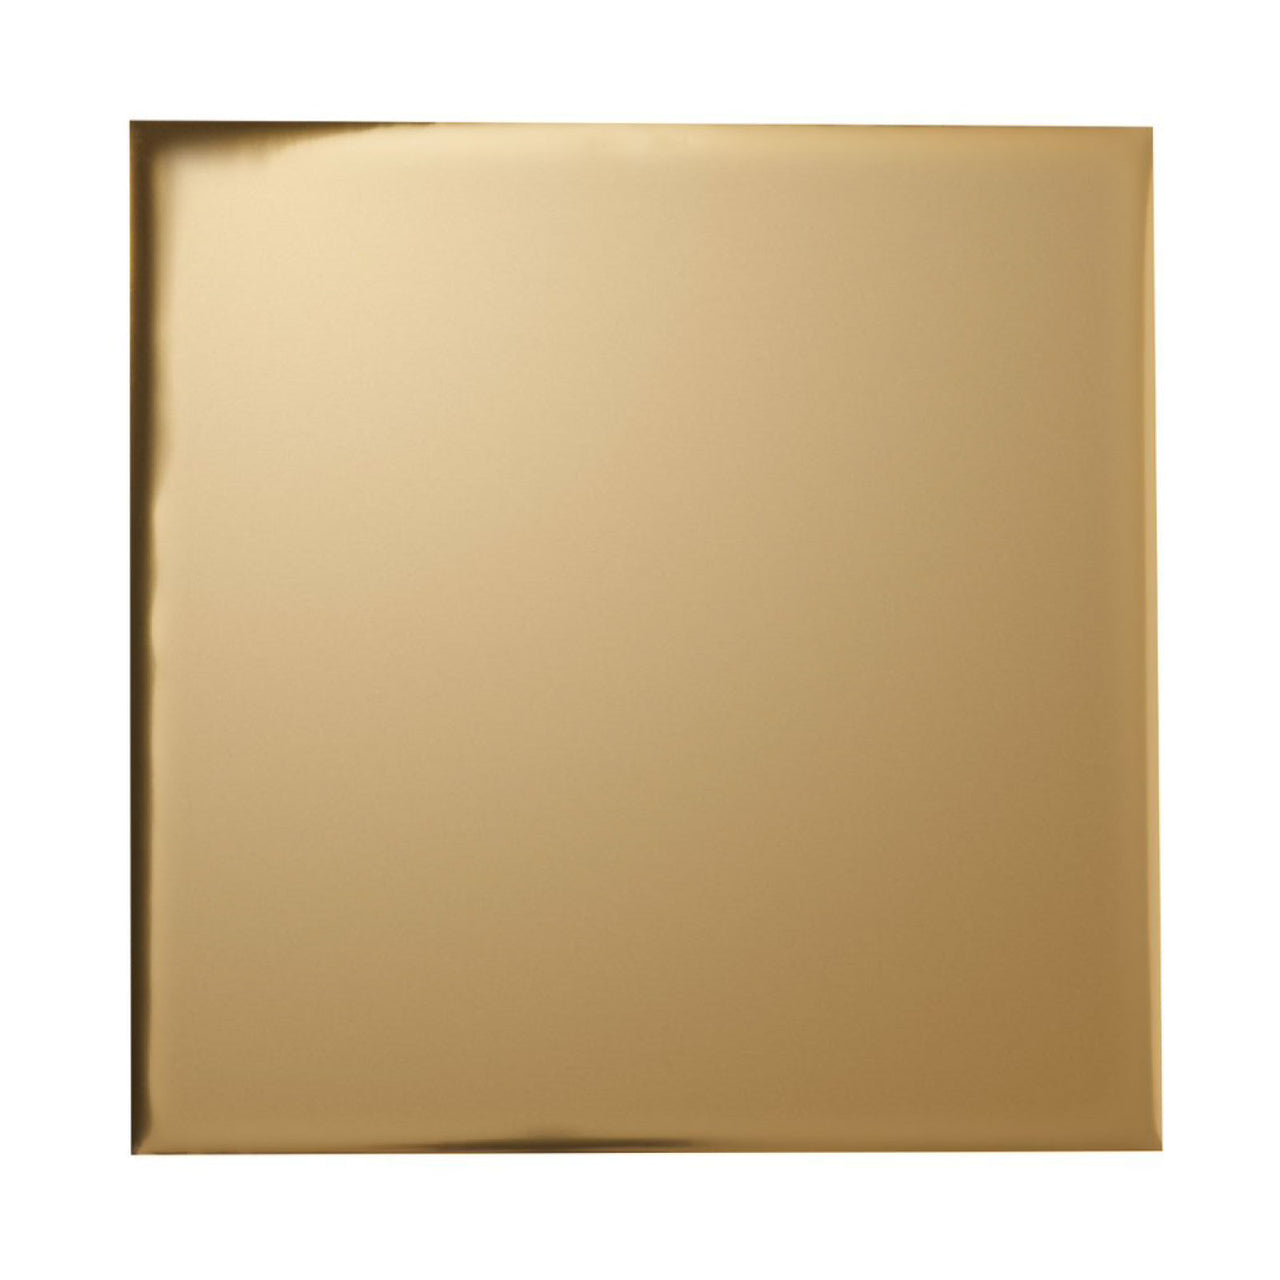 Cricut Foil Transfer Sheets - Gold (8ct), 12x12